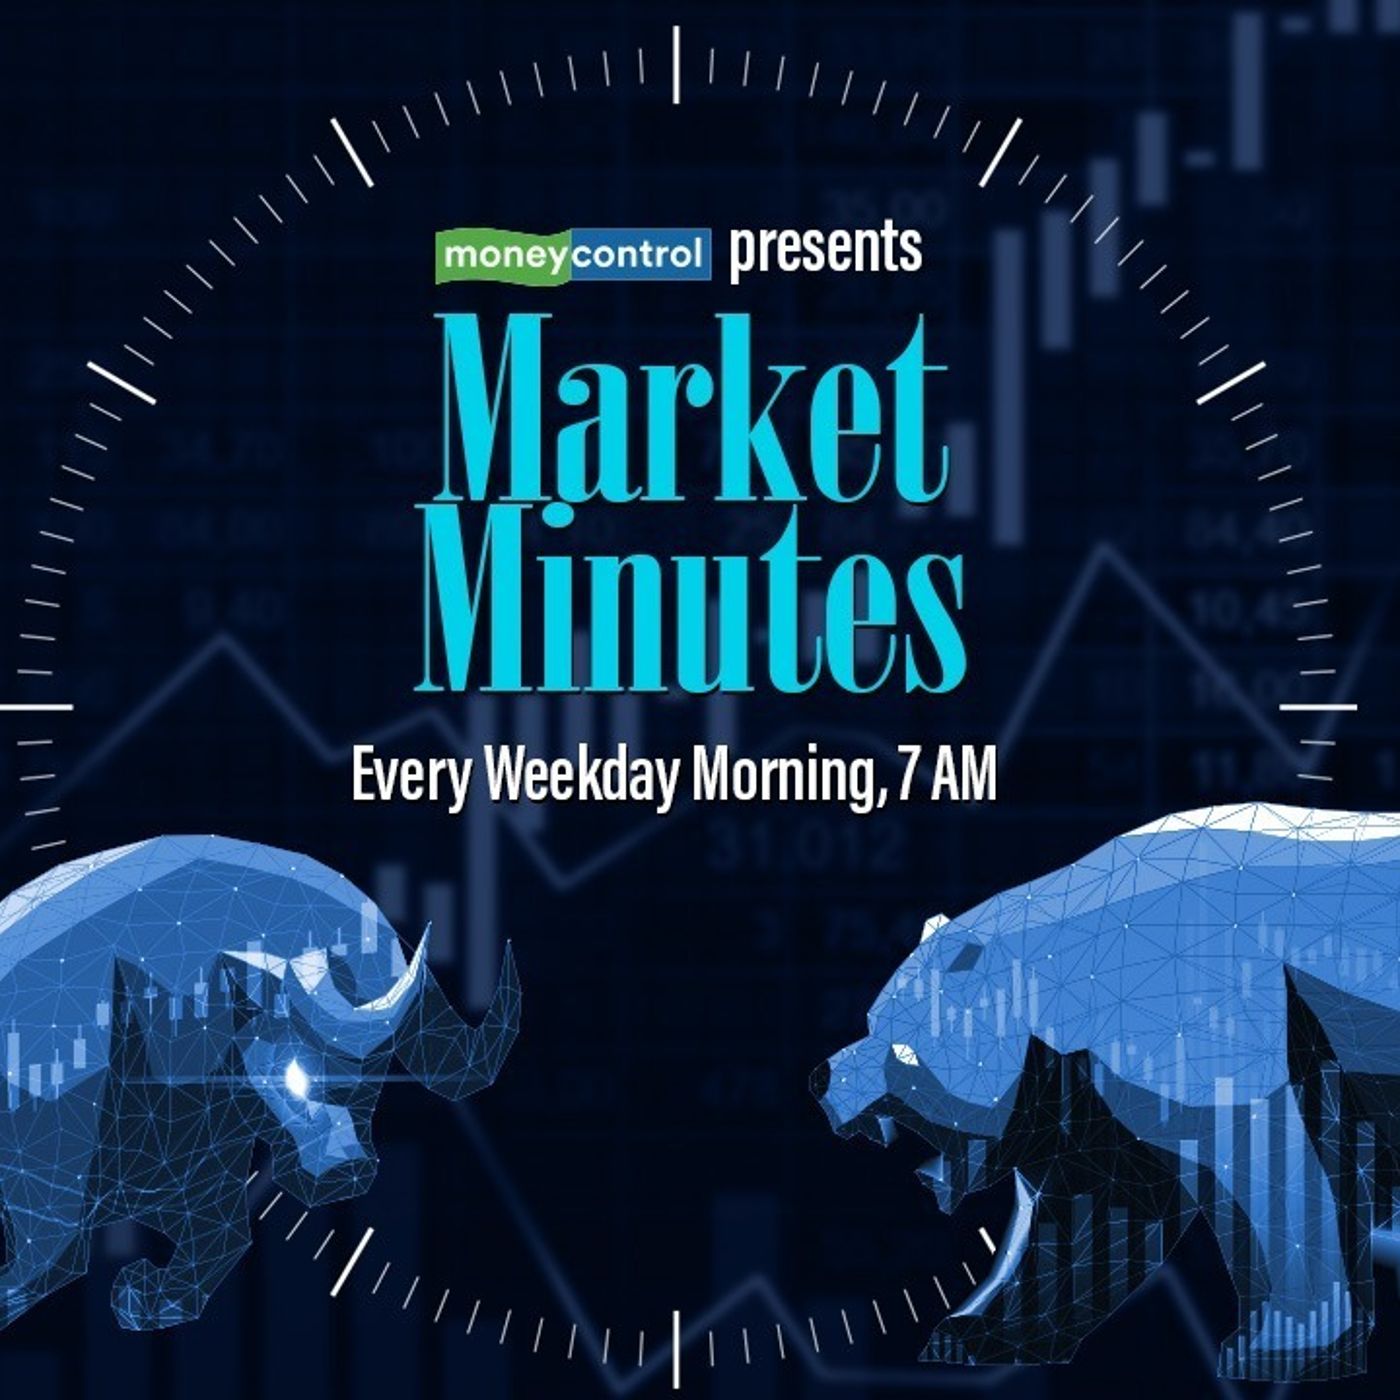 4225: Q4 results, Iran-Israel war developments, FII flows to guide markets this week | Market Minutes